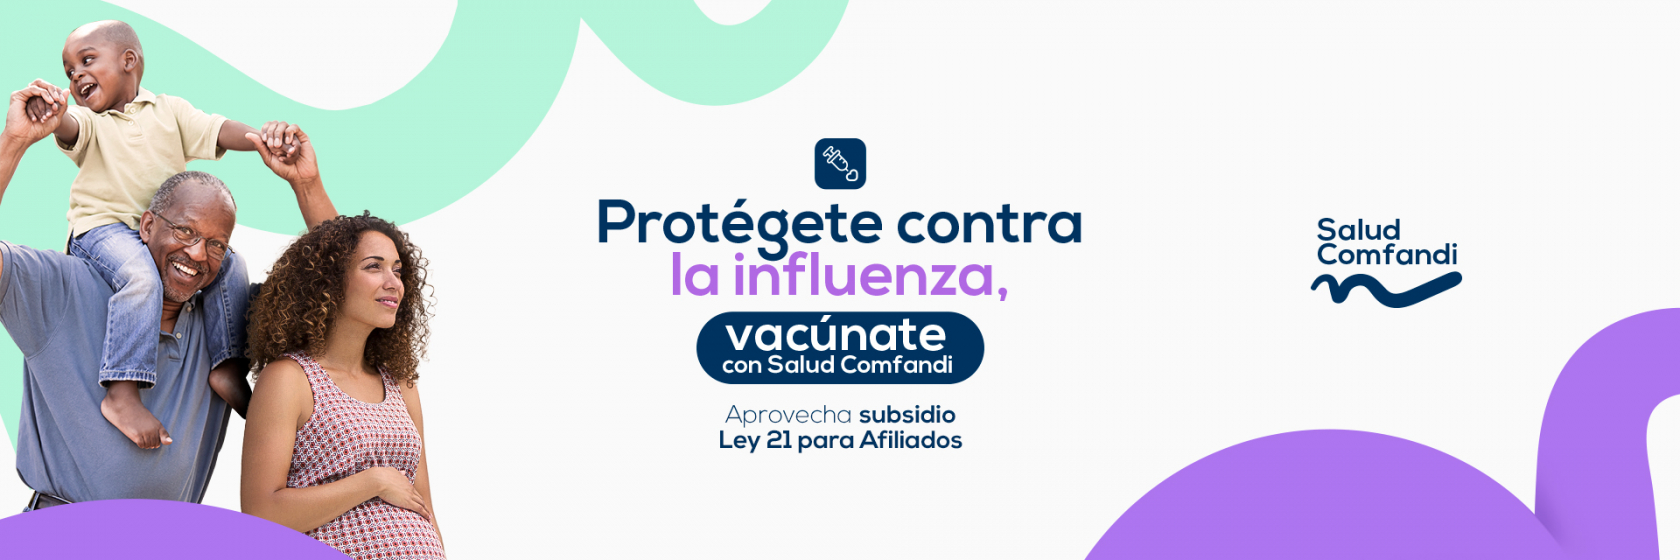 banner vacuna influenza 